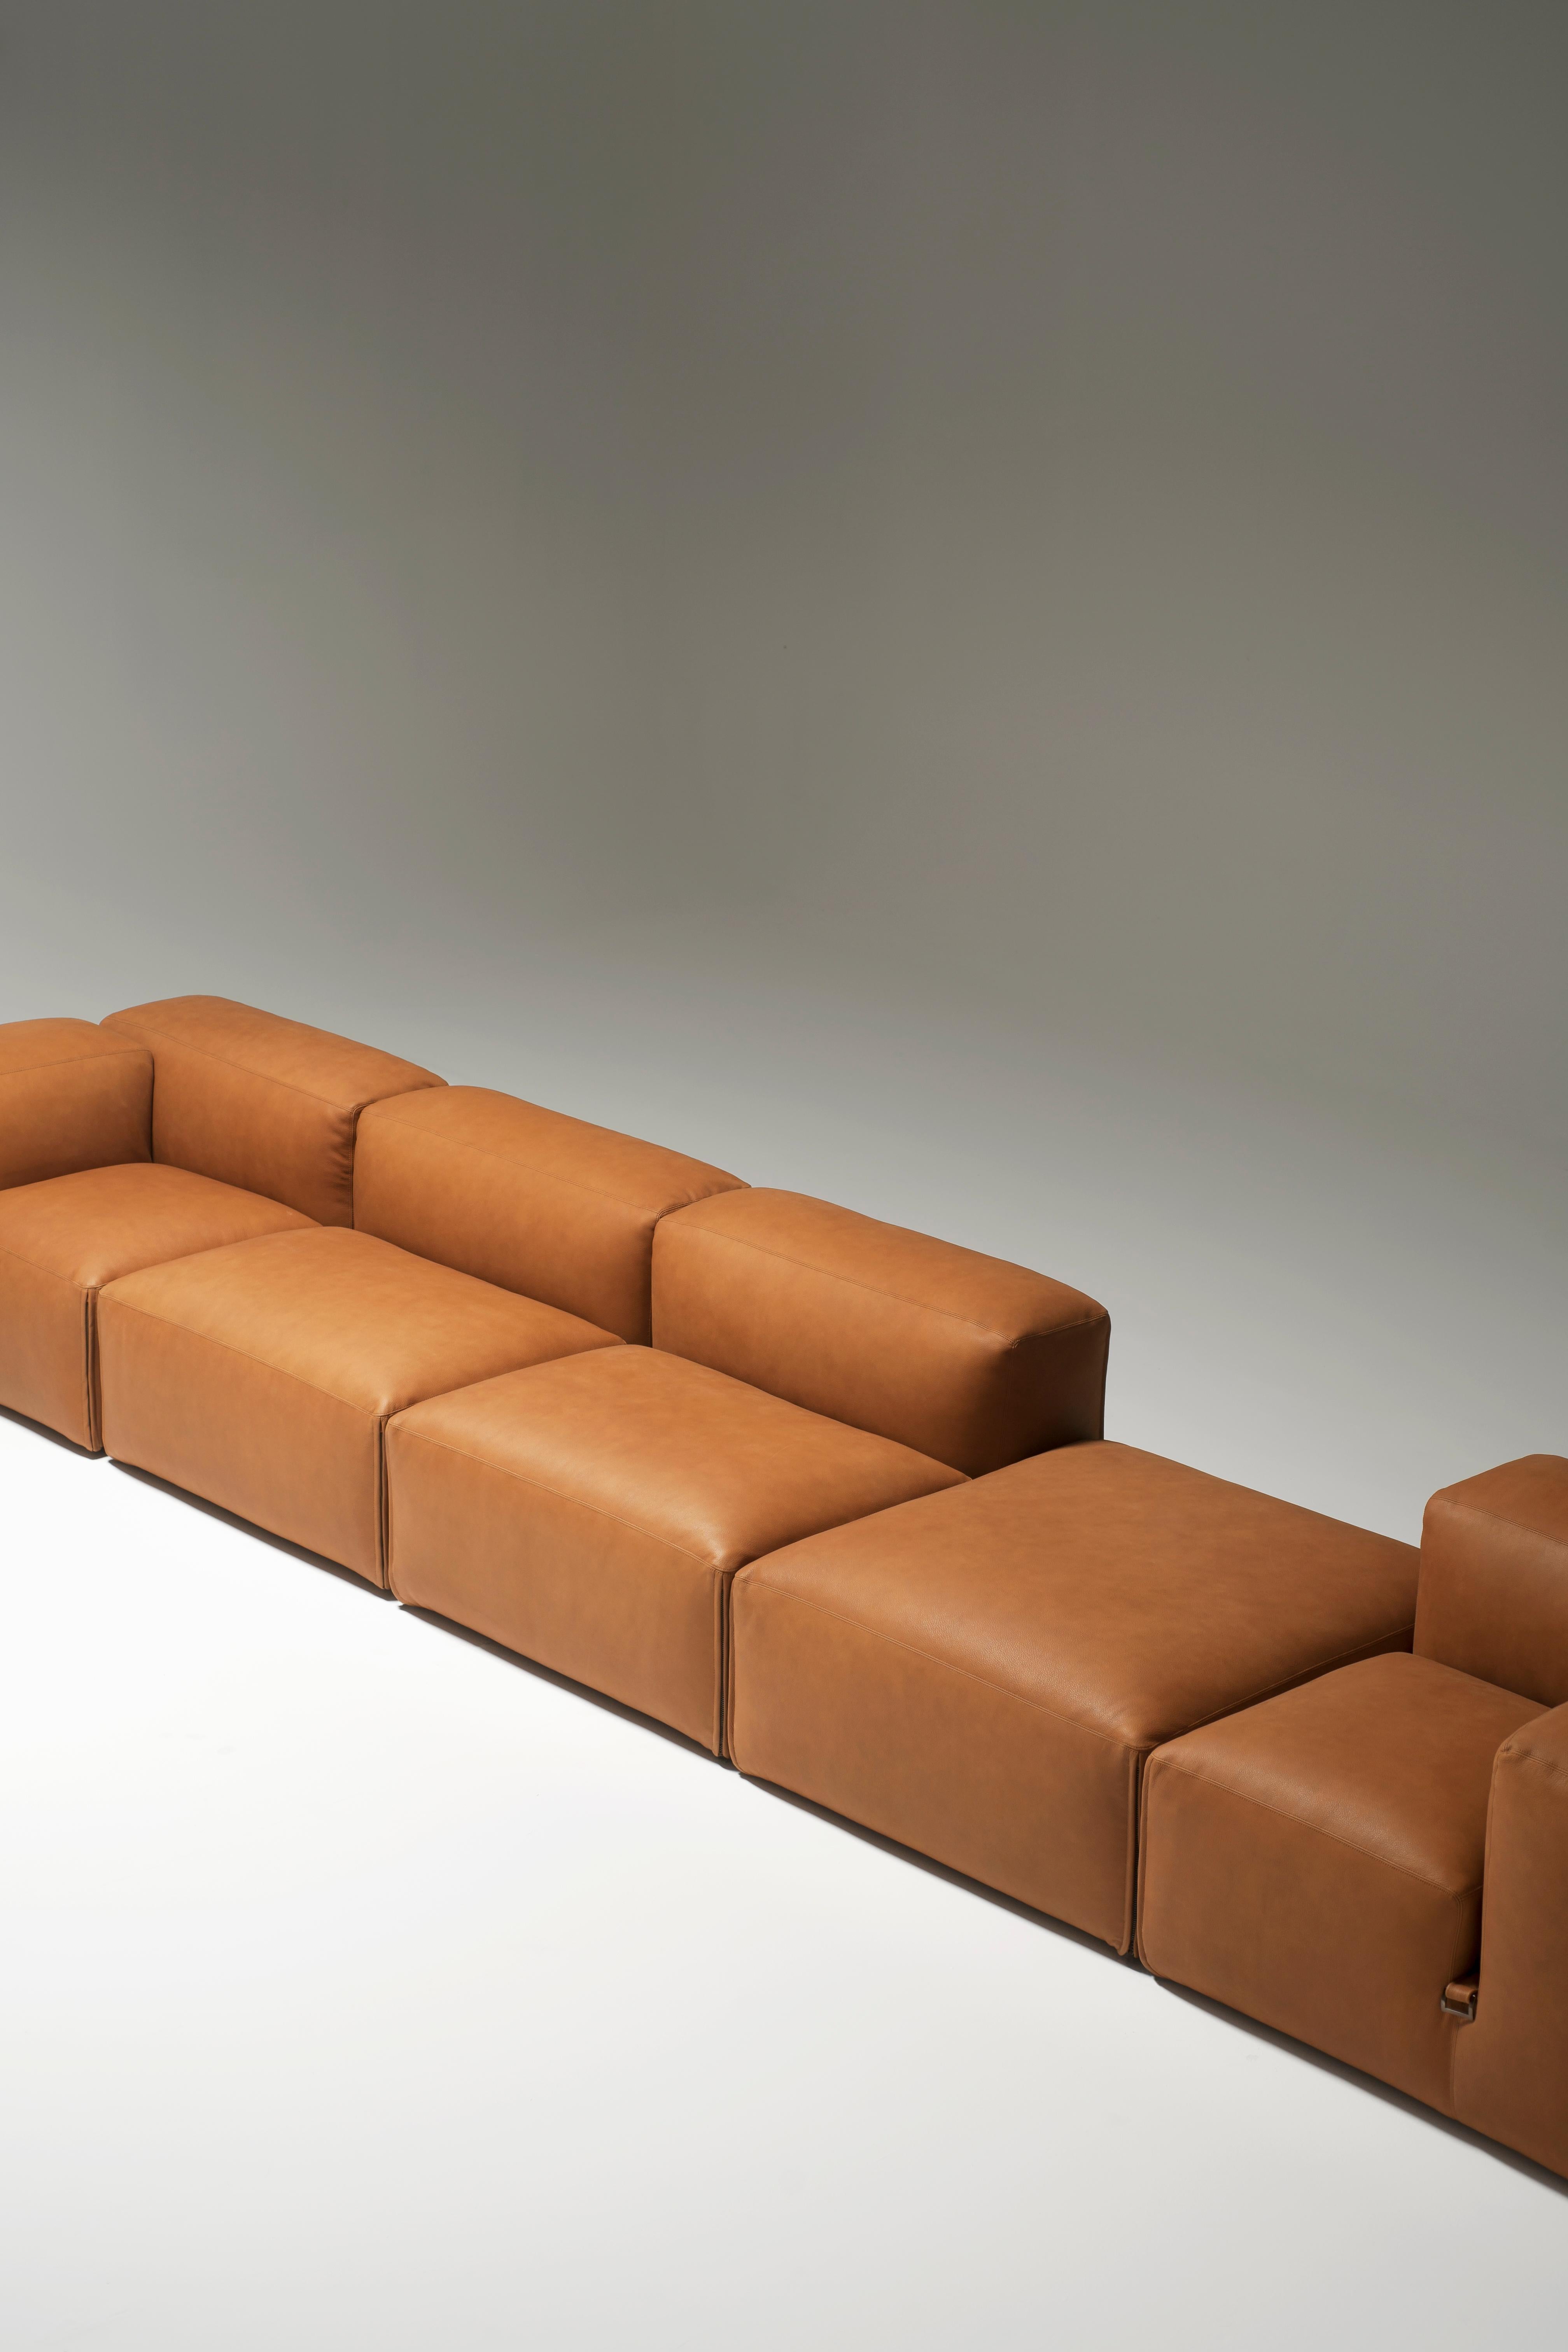 Upholstery Tacchini Le Mura Armchair designed by Mario Bellini